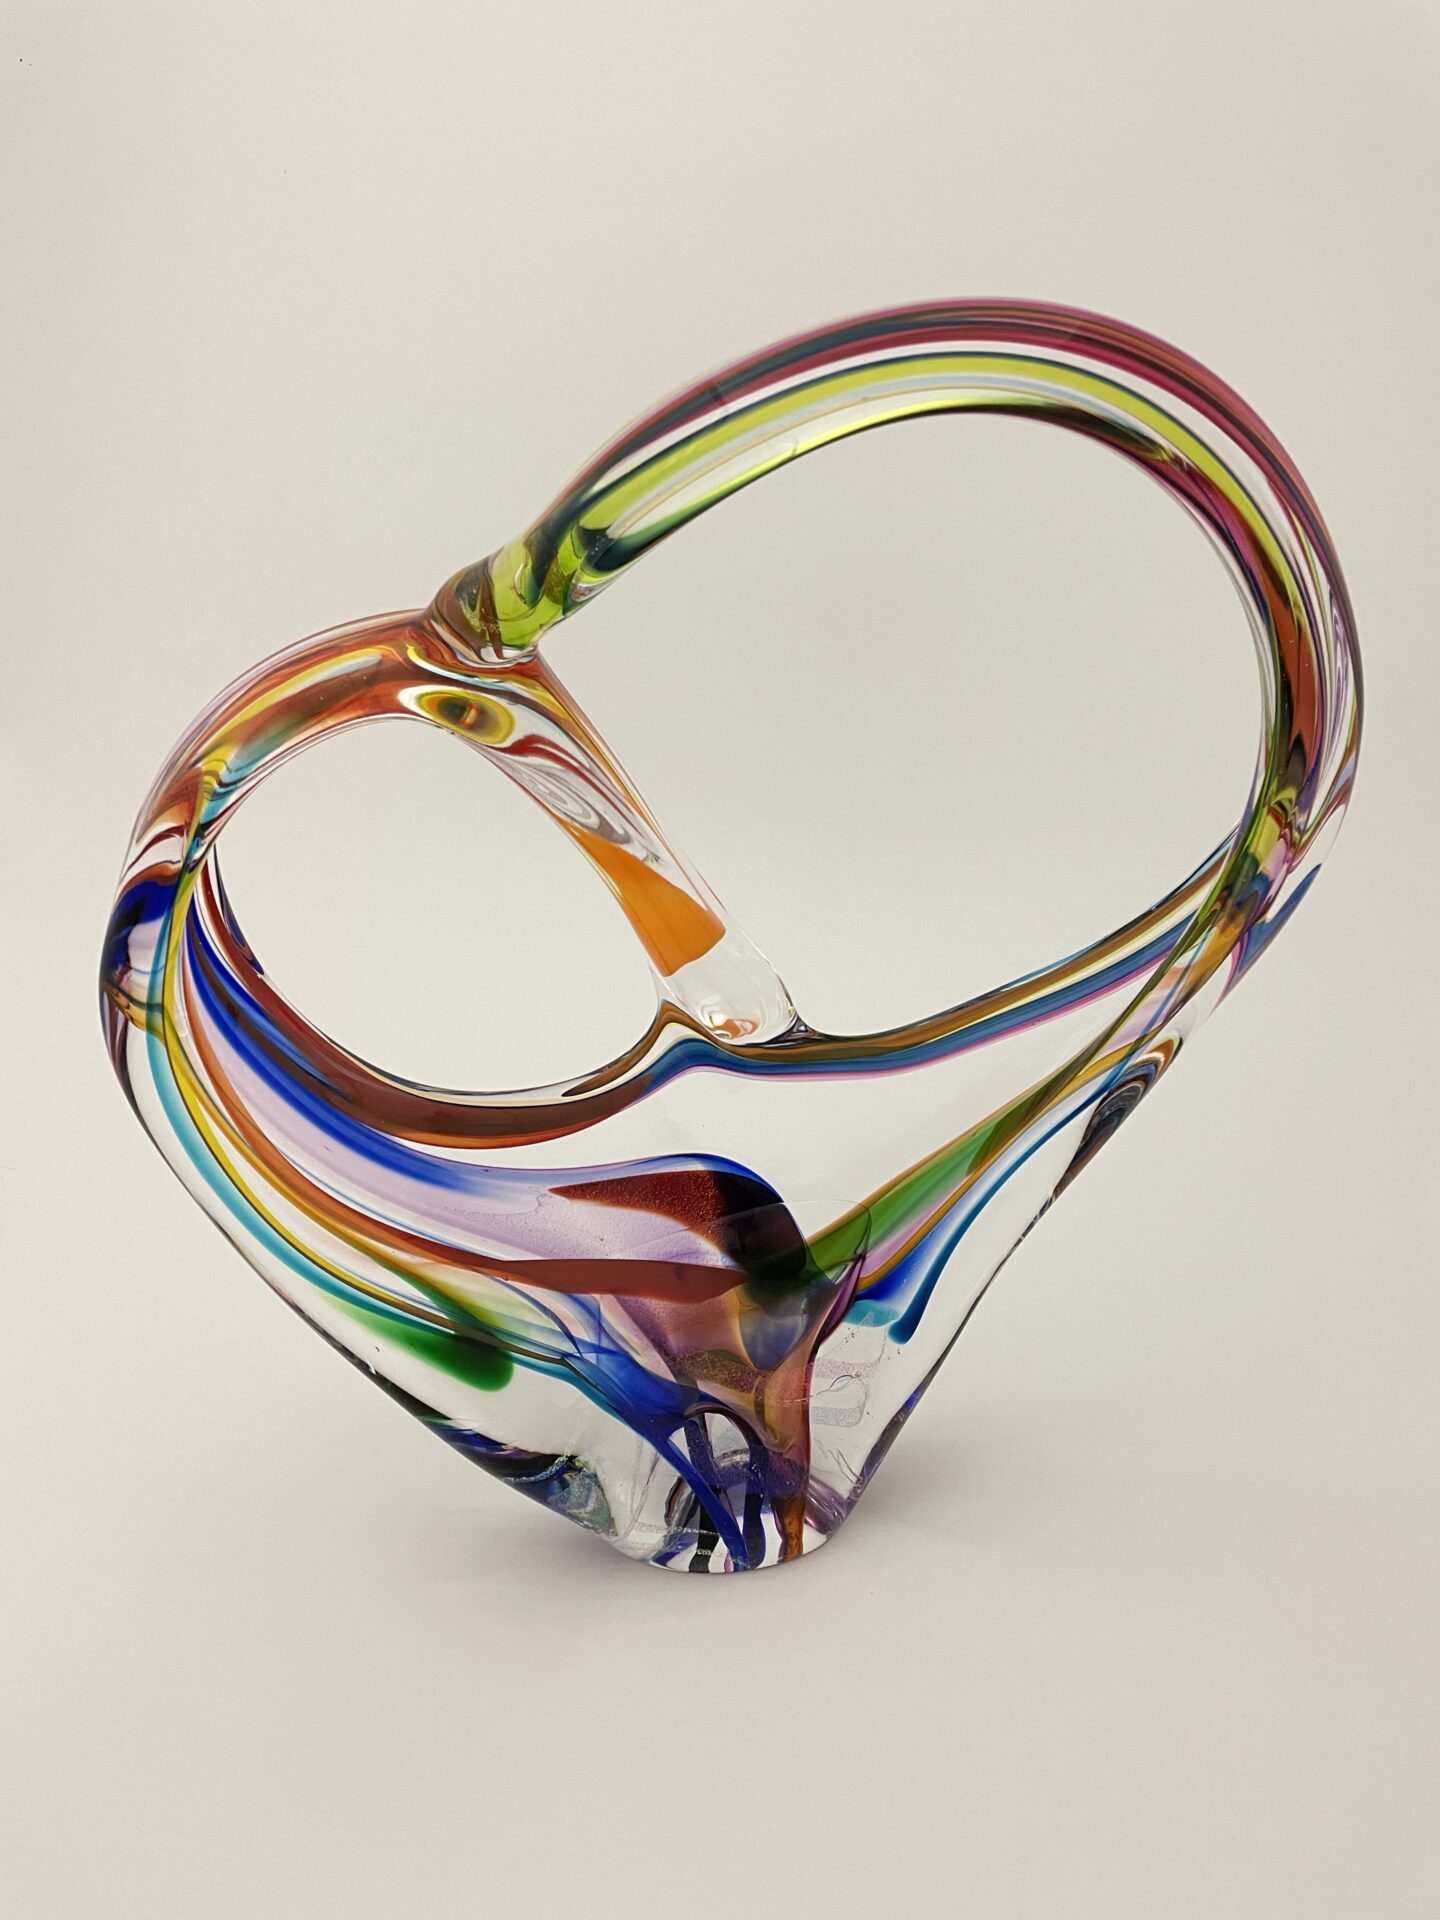 Thie pretzel glass sculpture by David Goldhagen is done in multiple colors.